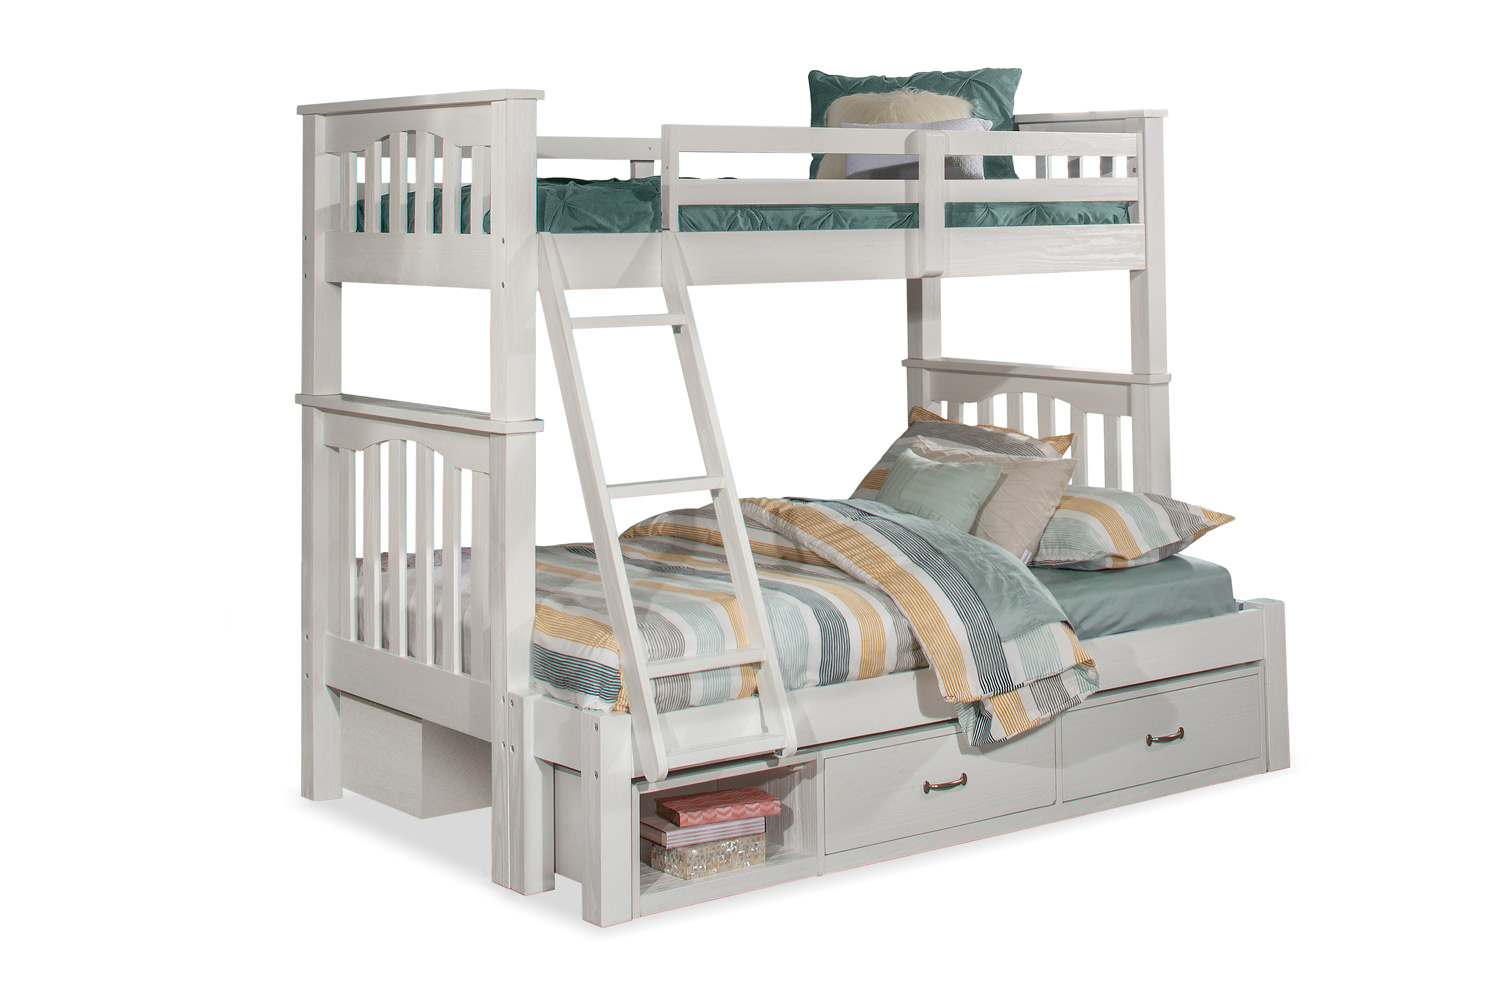 NE Kids Highlands Harper Twin/Full Bunk Bed with (2) Storage Units - White Finish